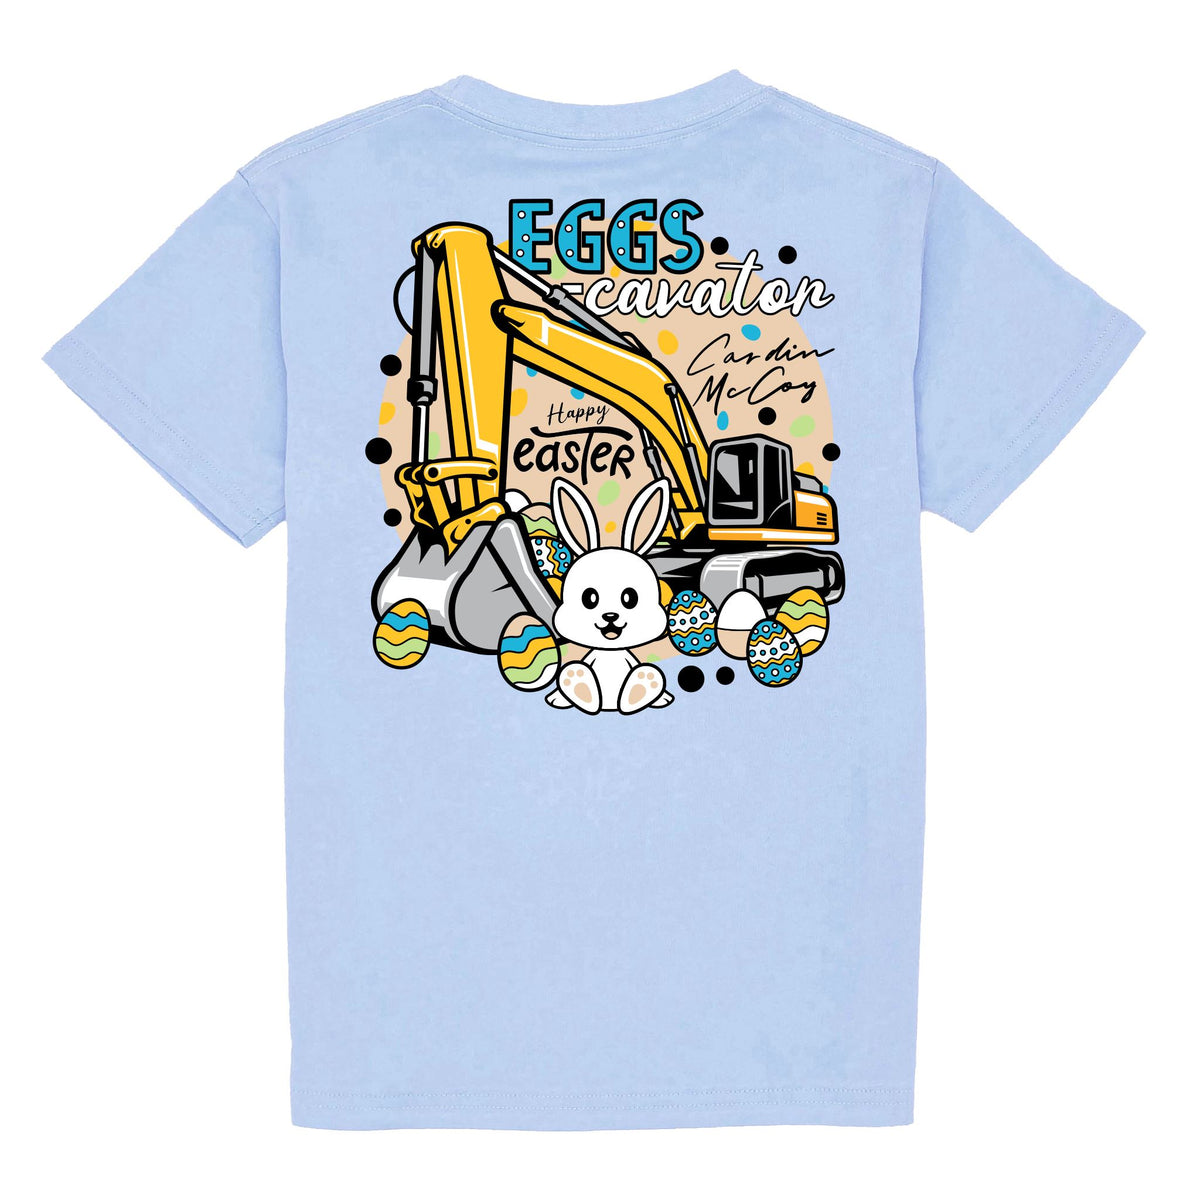 Kids' Eggscavator Short Sleeve Pocket Tee Short Sleeve T-Shirt Cardin McCoy Light Blue XXS (2/3) 